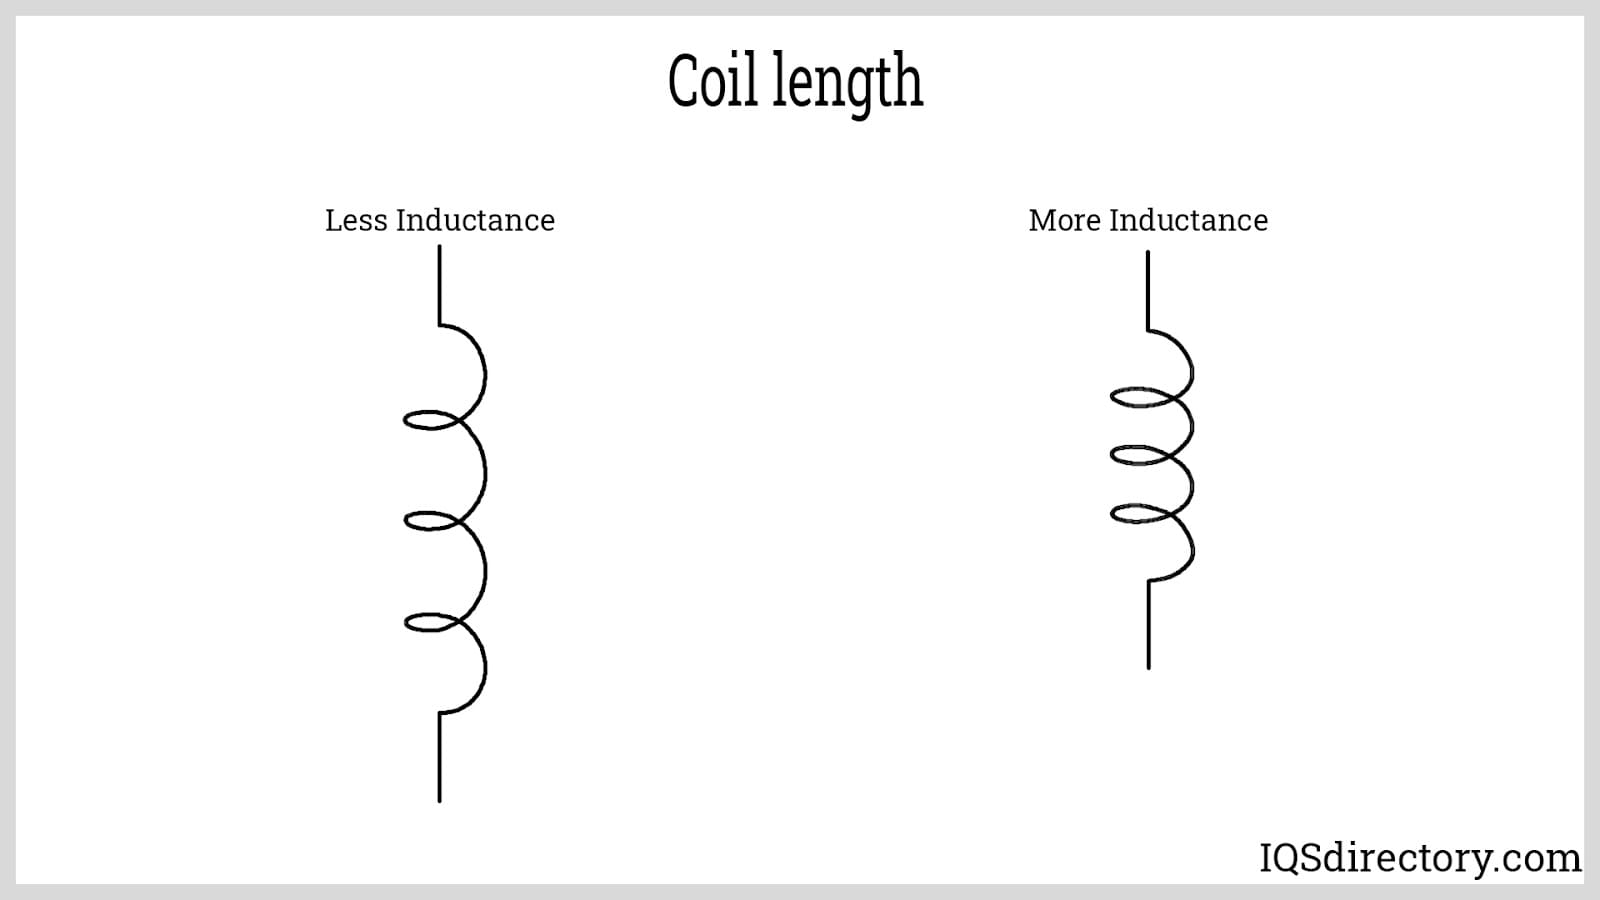 Coil length